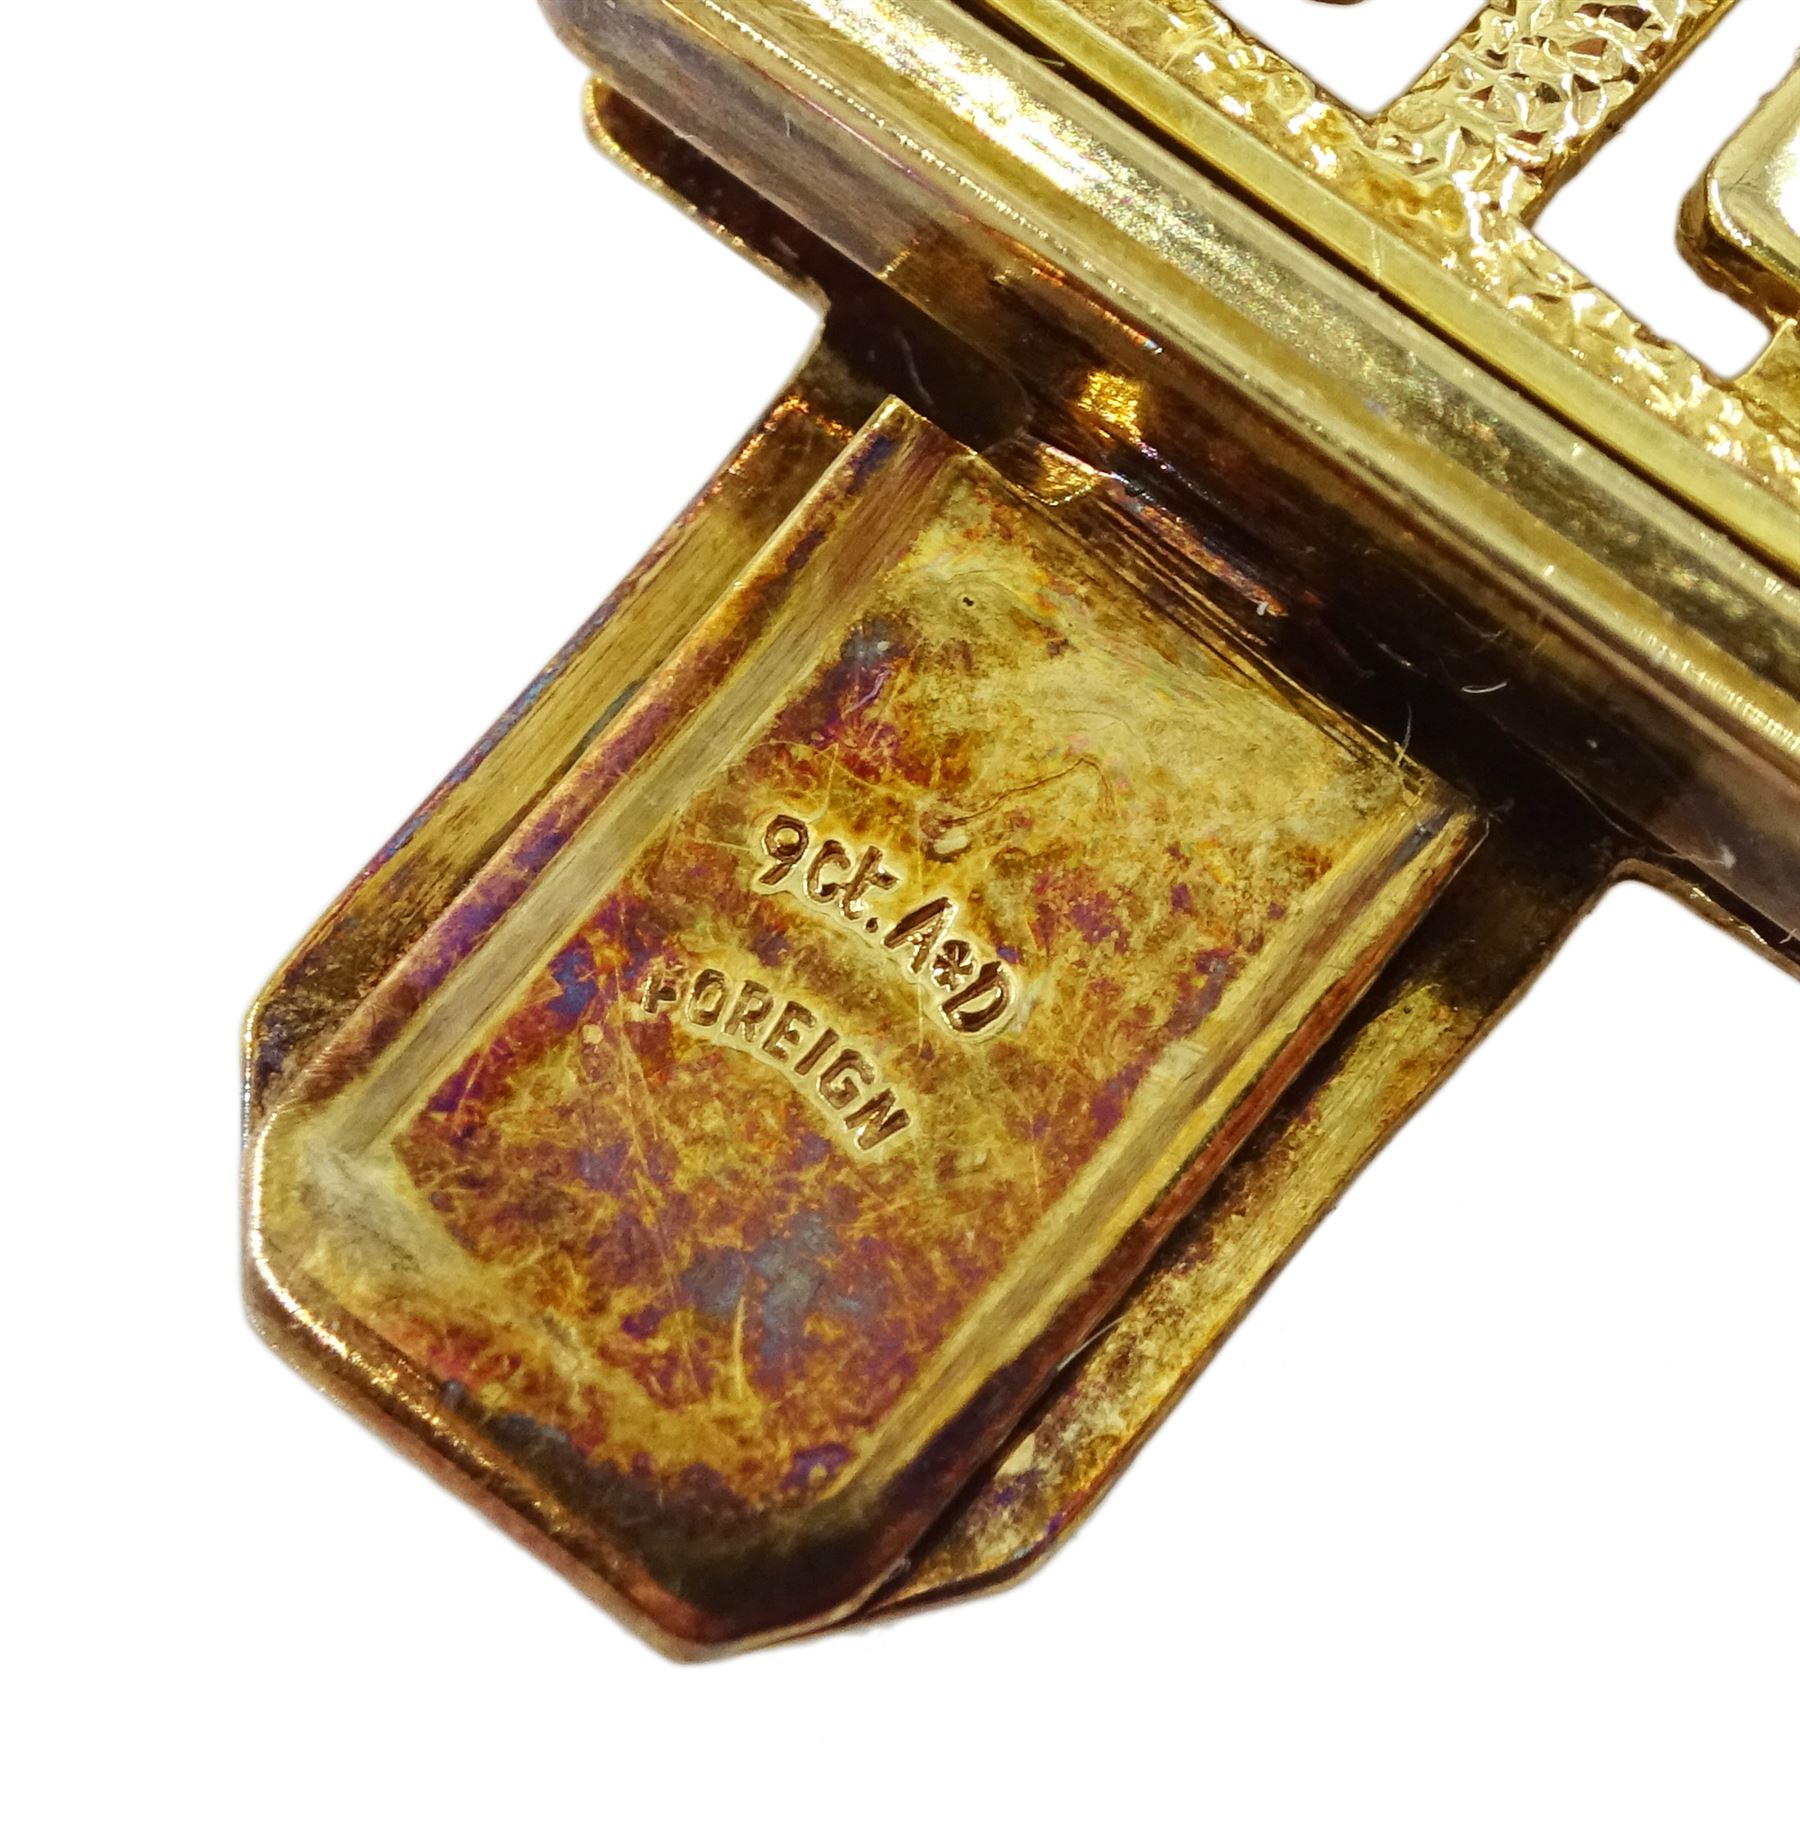 9ct gold textured and polished link bracelet - Image 2 of 3